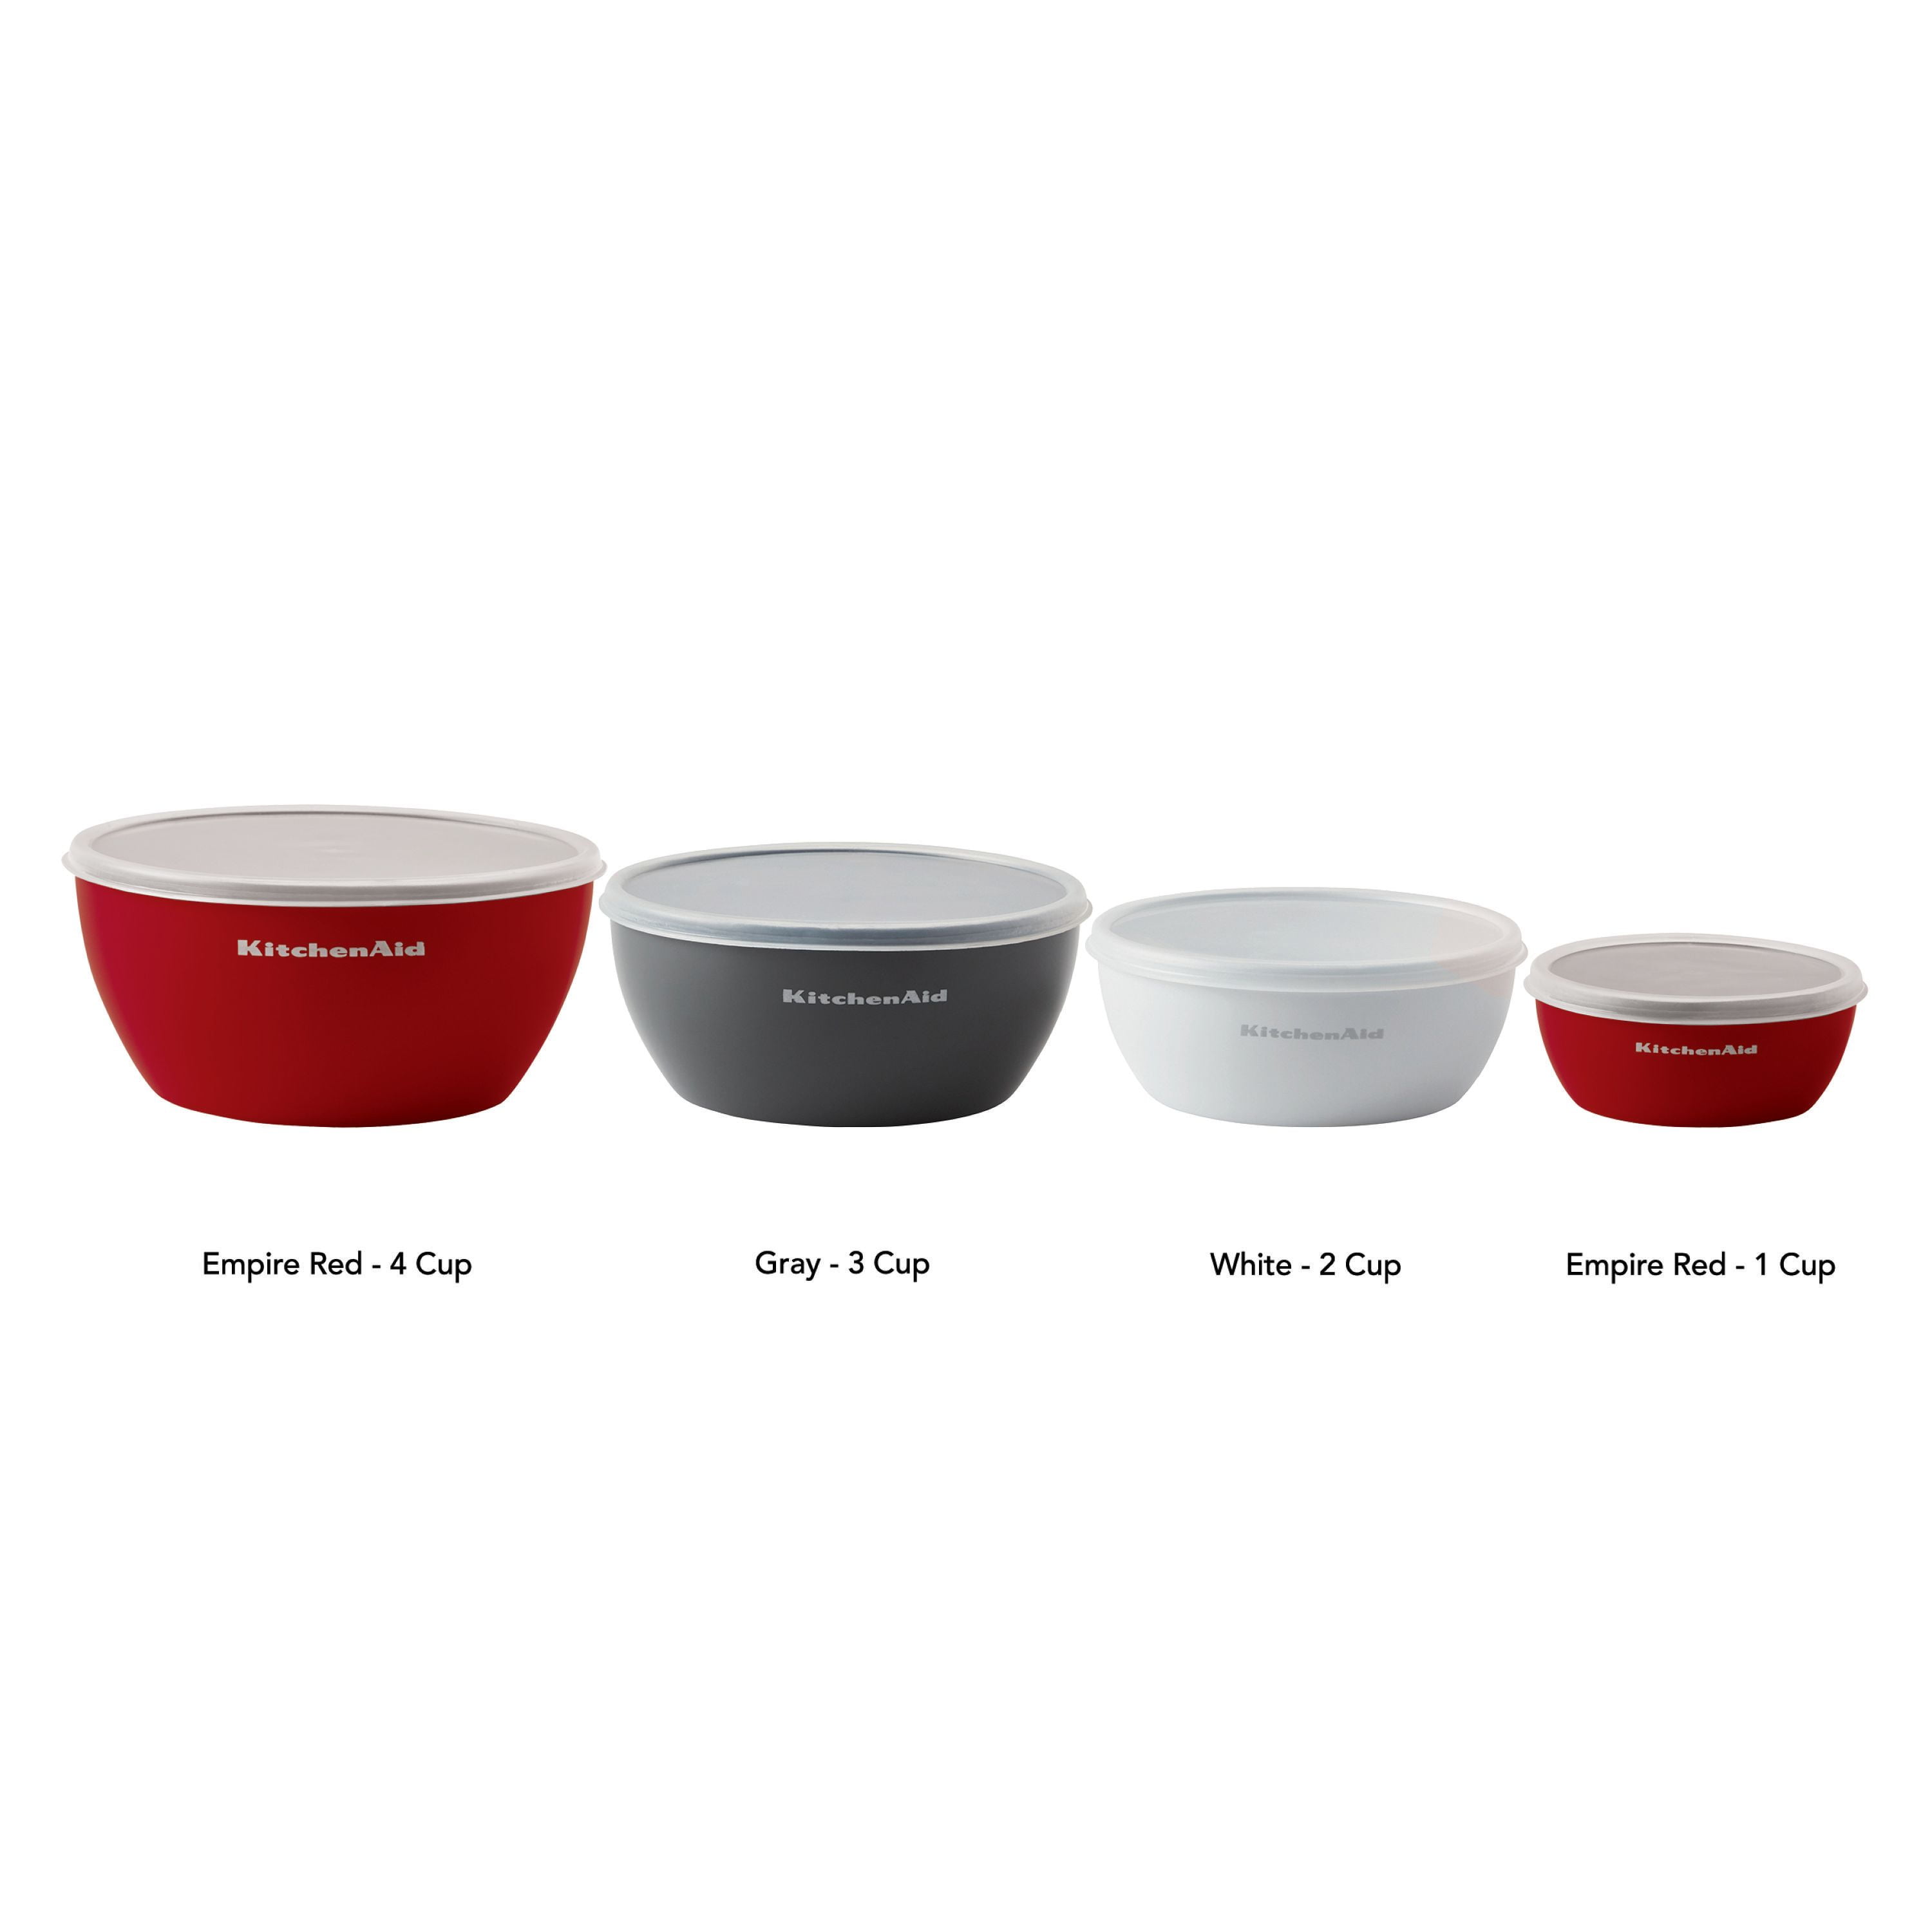 Kitchenaid Prep Bowls, Set of 4